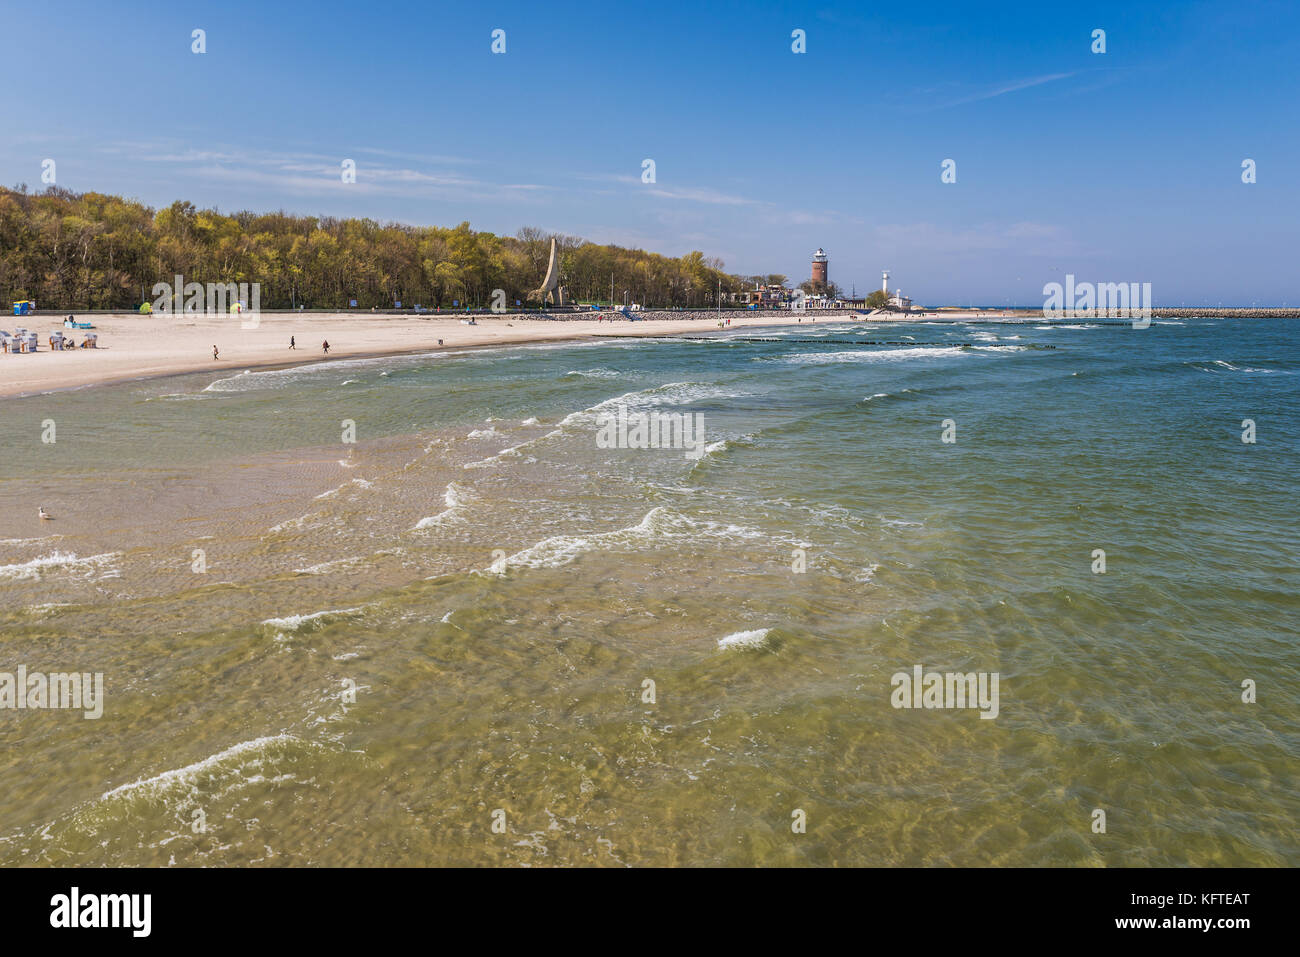 Coastline of the Baltic Sea in Kołobrzeg city in West Pomeranian Voivodeship of Poland Stock Photo